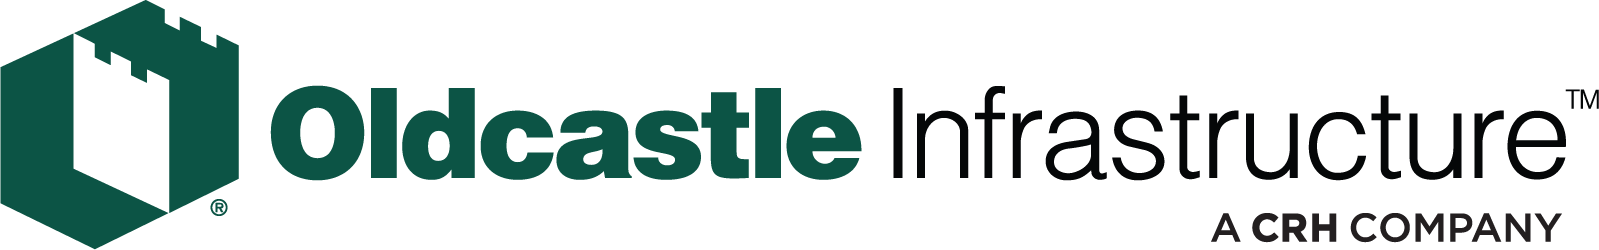 Oldcastle Logo - Communications Archives - Oldcastle Enclosure Solutions